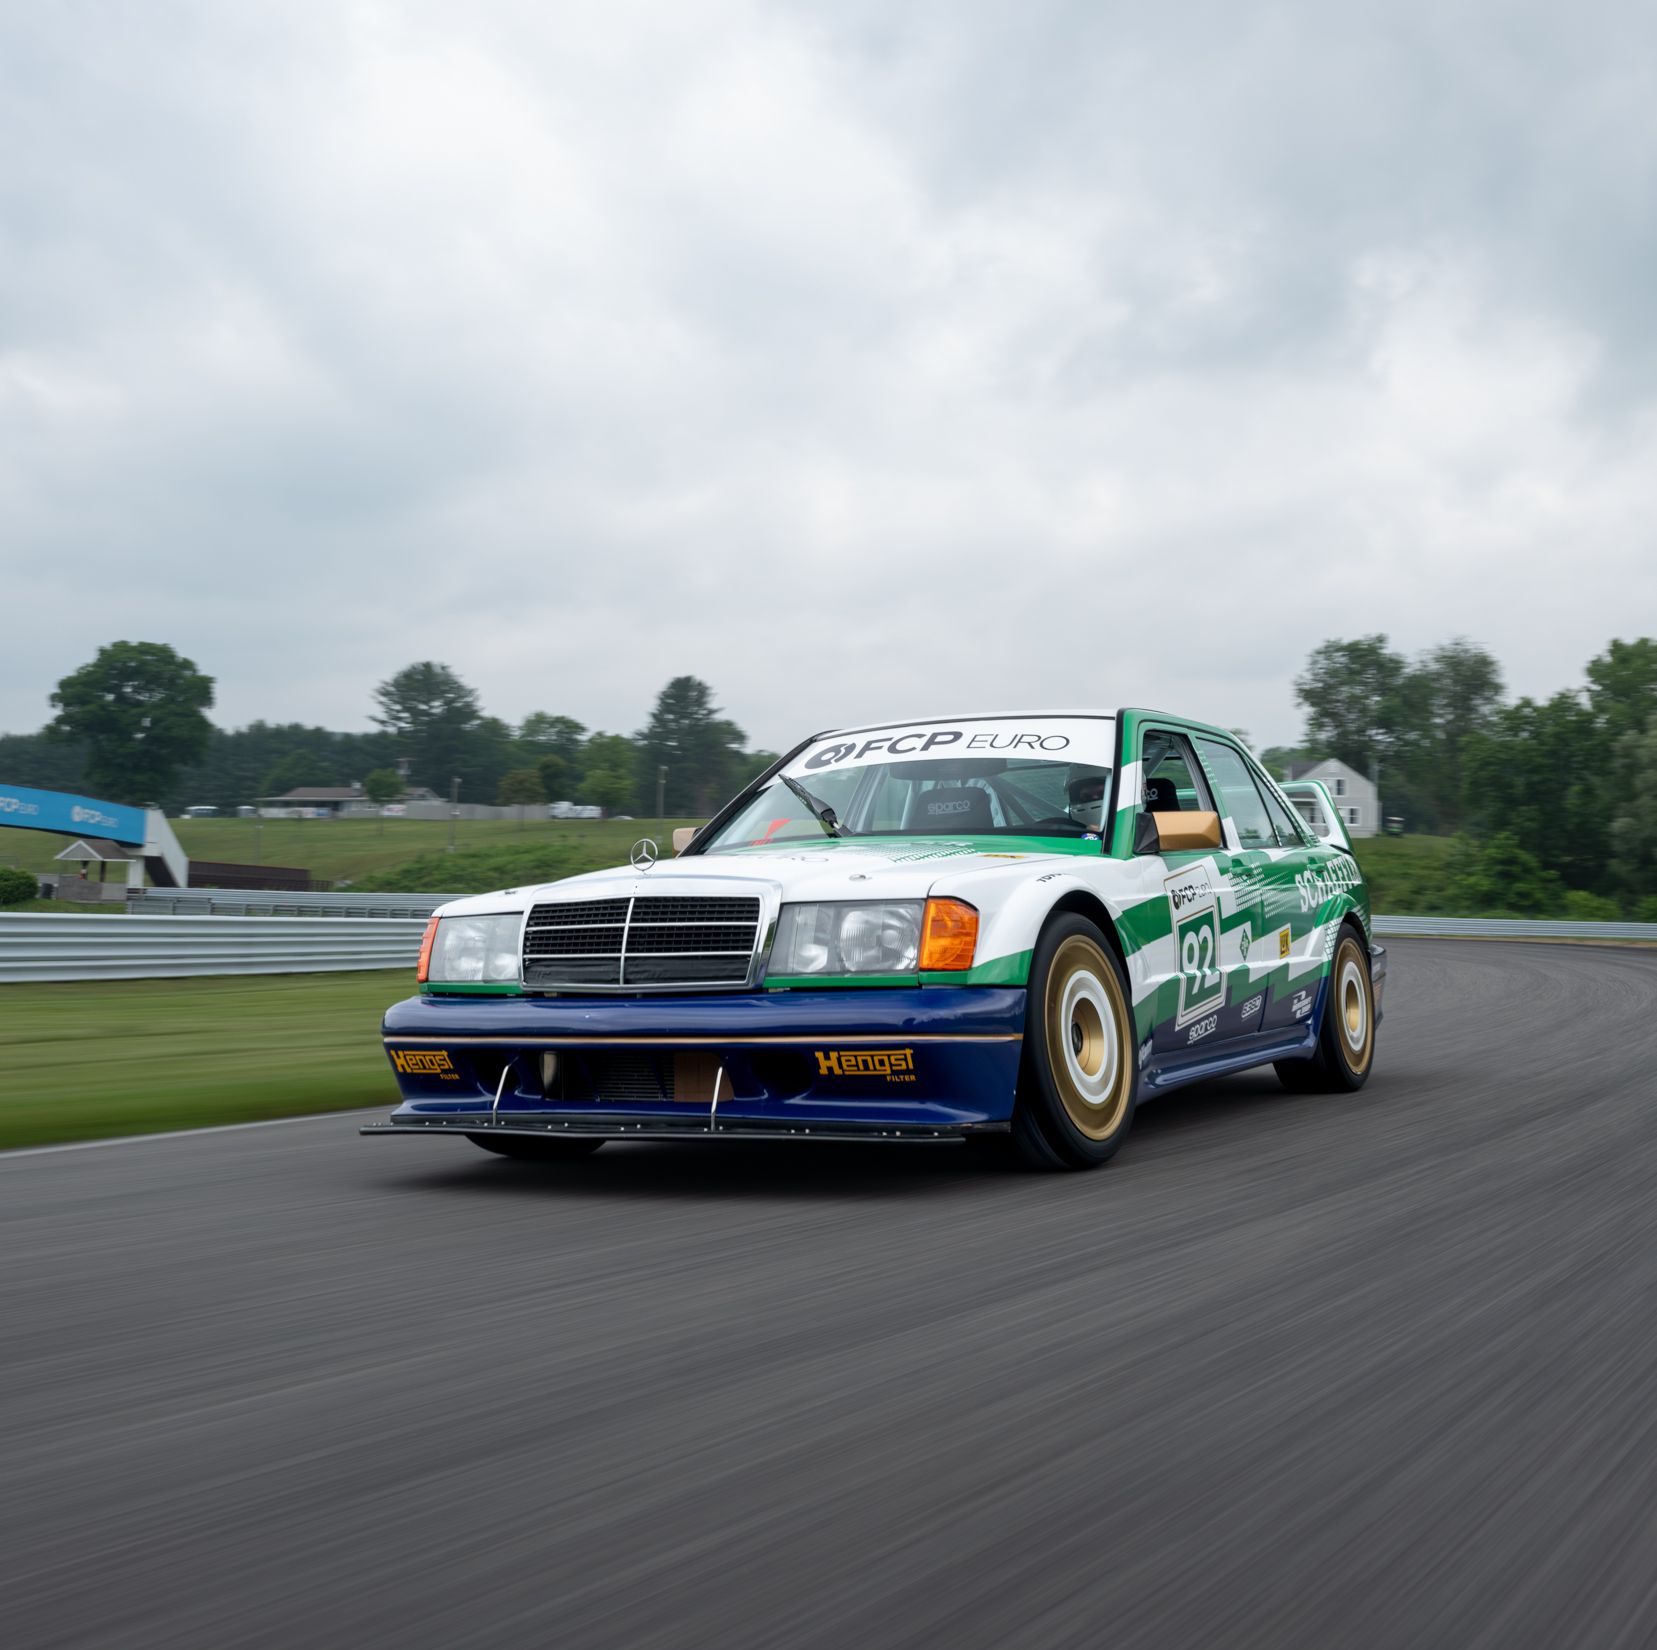 Chasing Nostalgia in a Mercedes 190E Restomod Racer